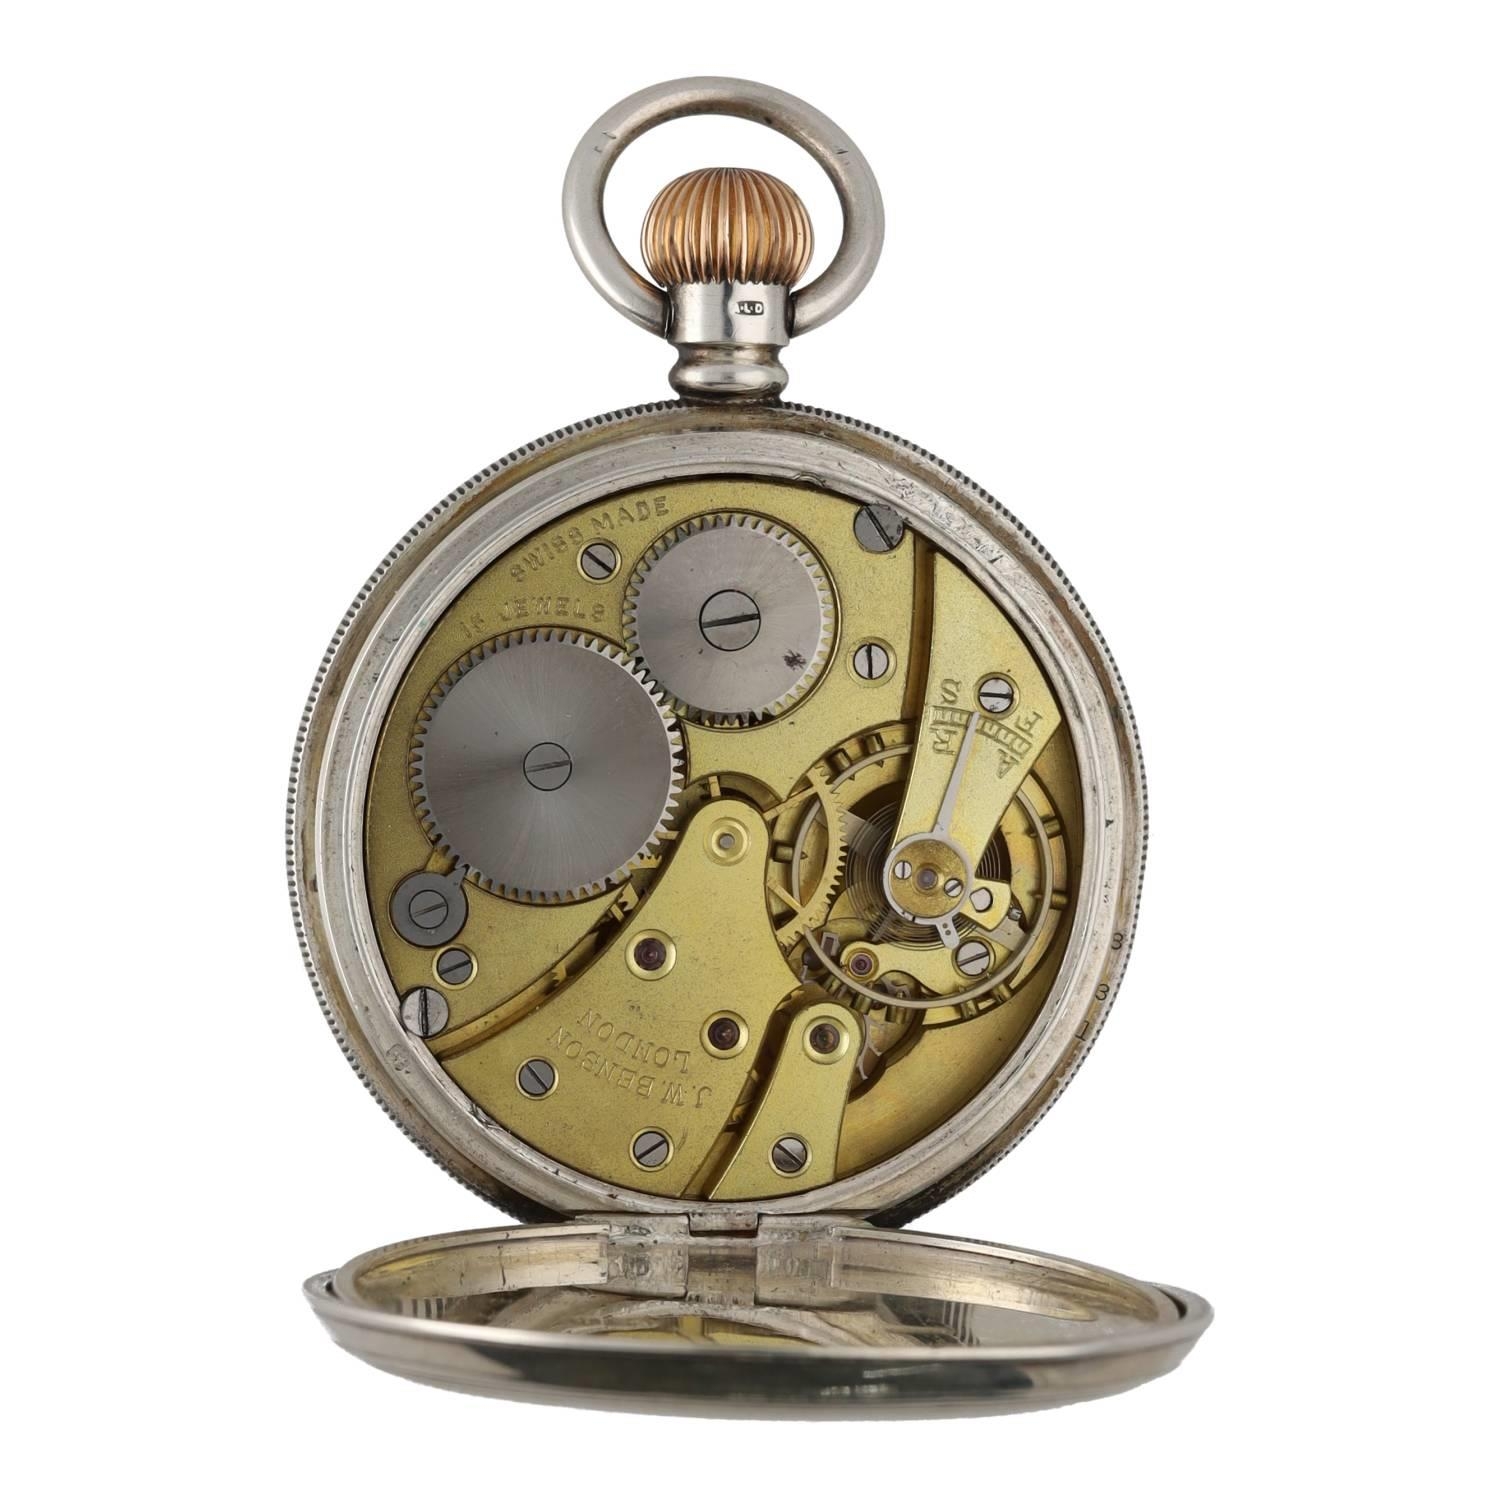 J.W. Benson, London - silver lever pocket watch, Birmingham 1909, signed 15 jewel movement, hinged - Image 3 of 4